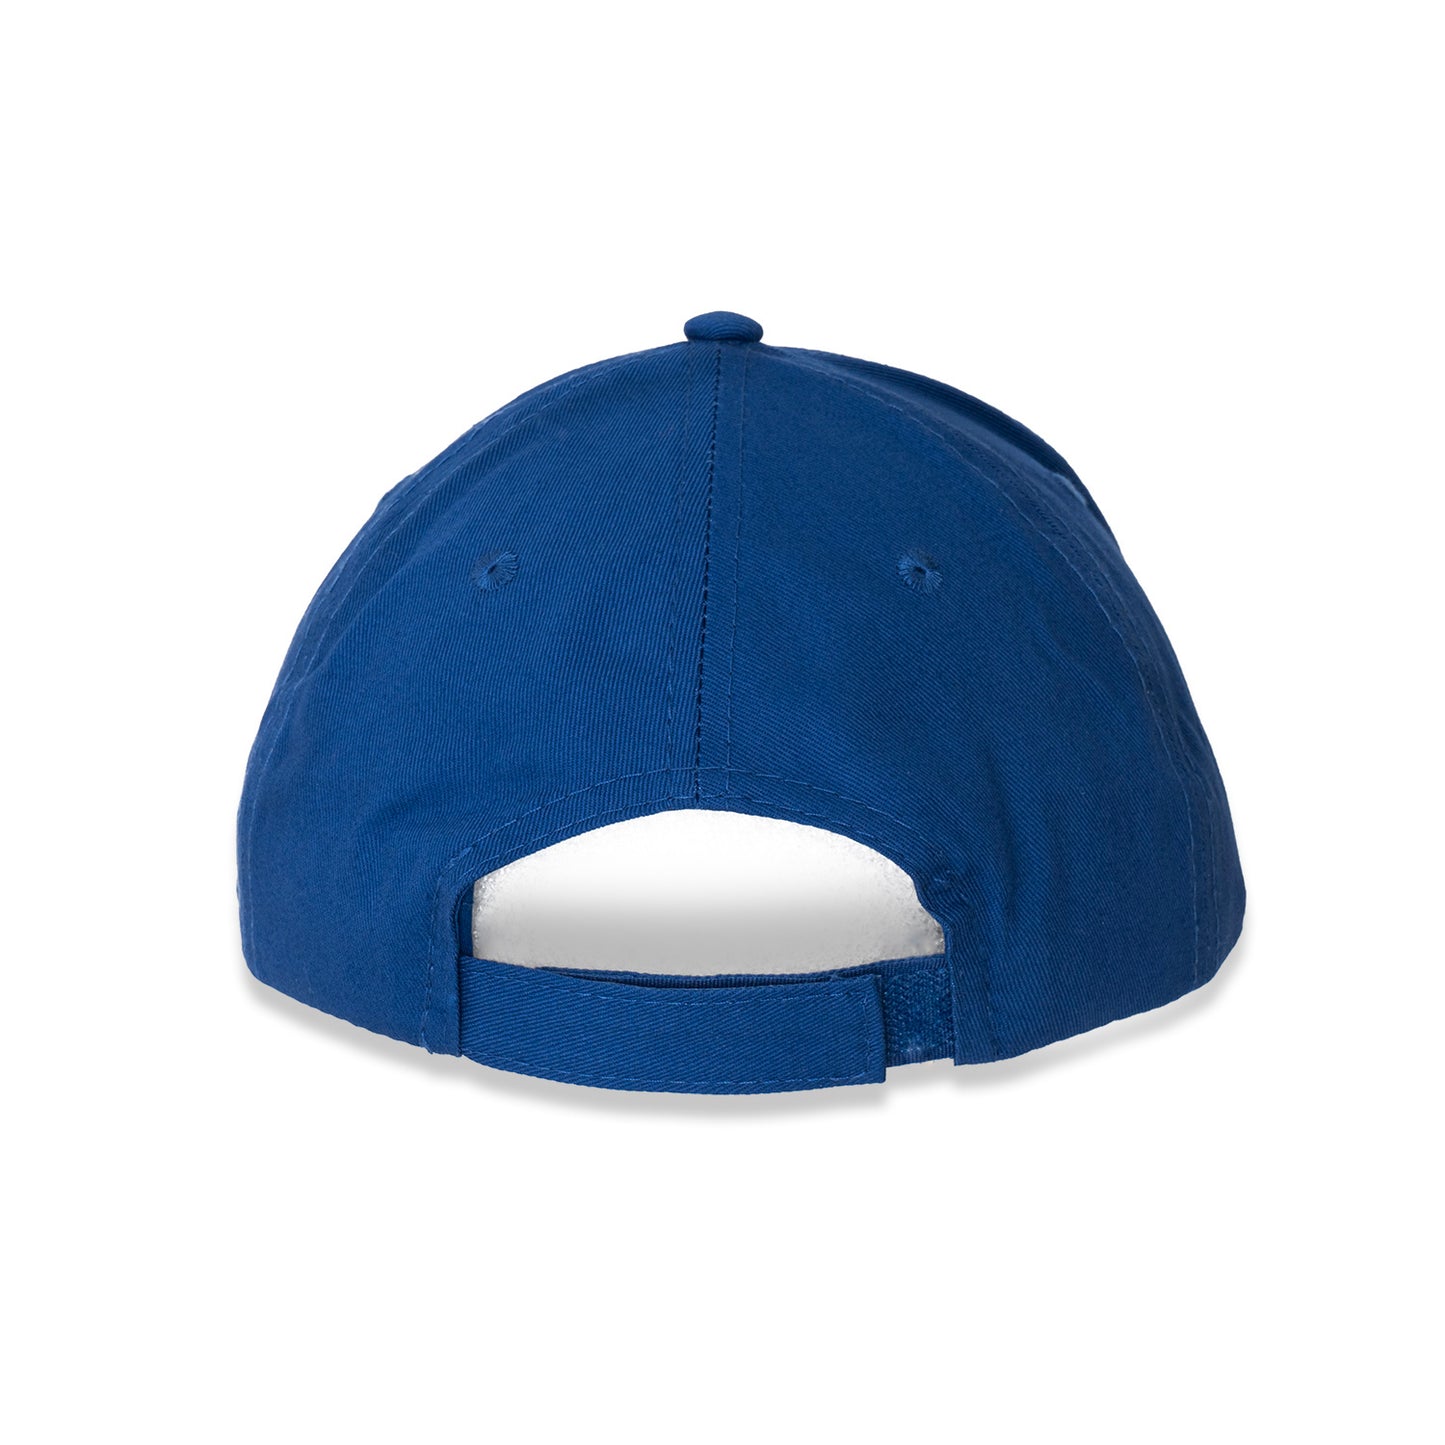 IMSA Youth Hat - Royal Blue